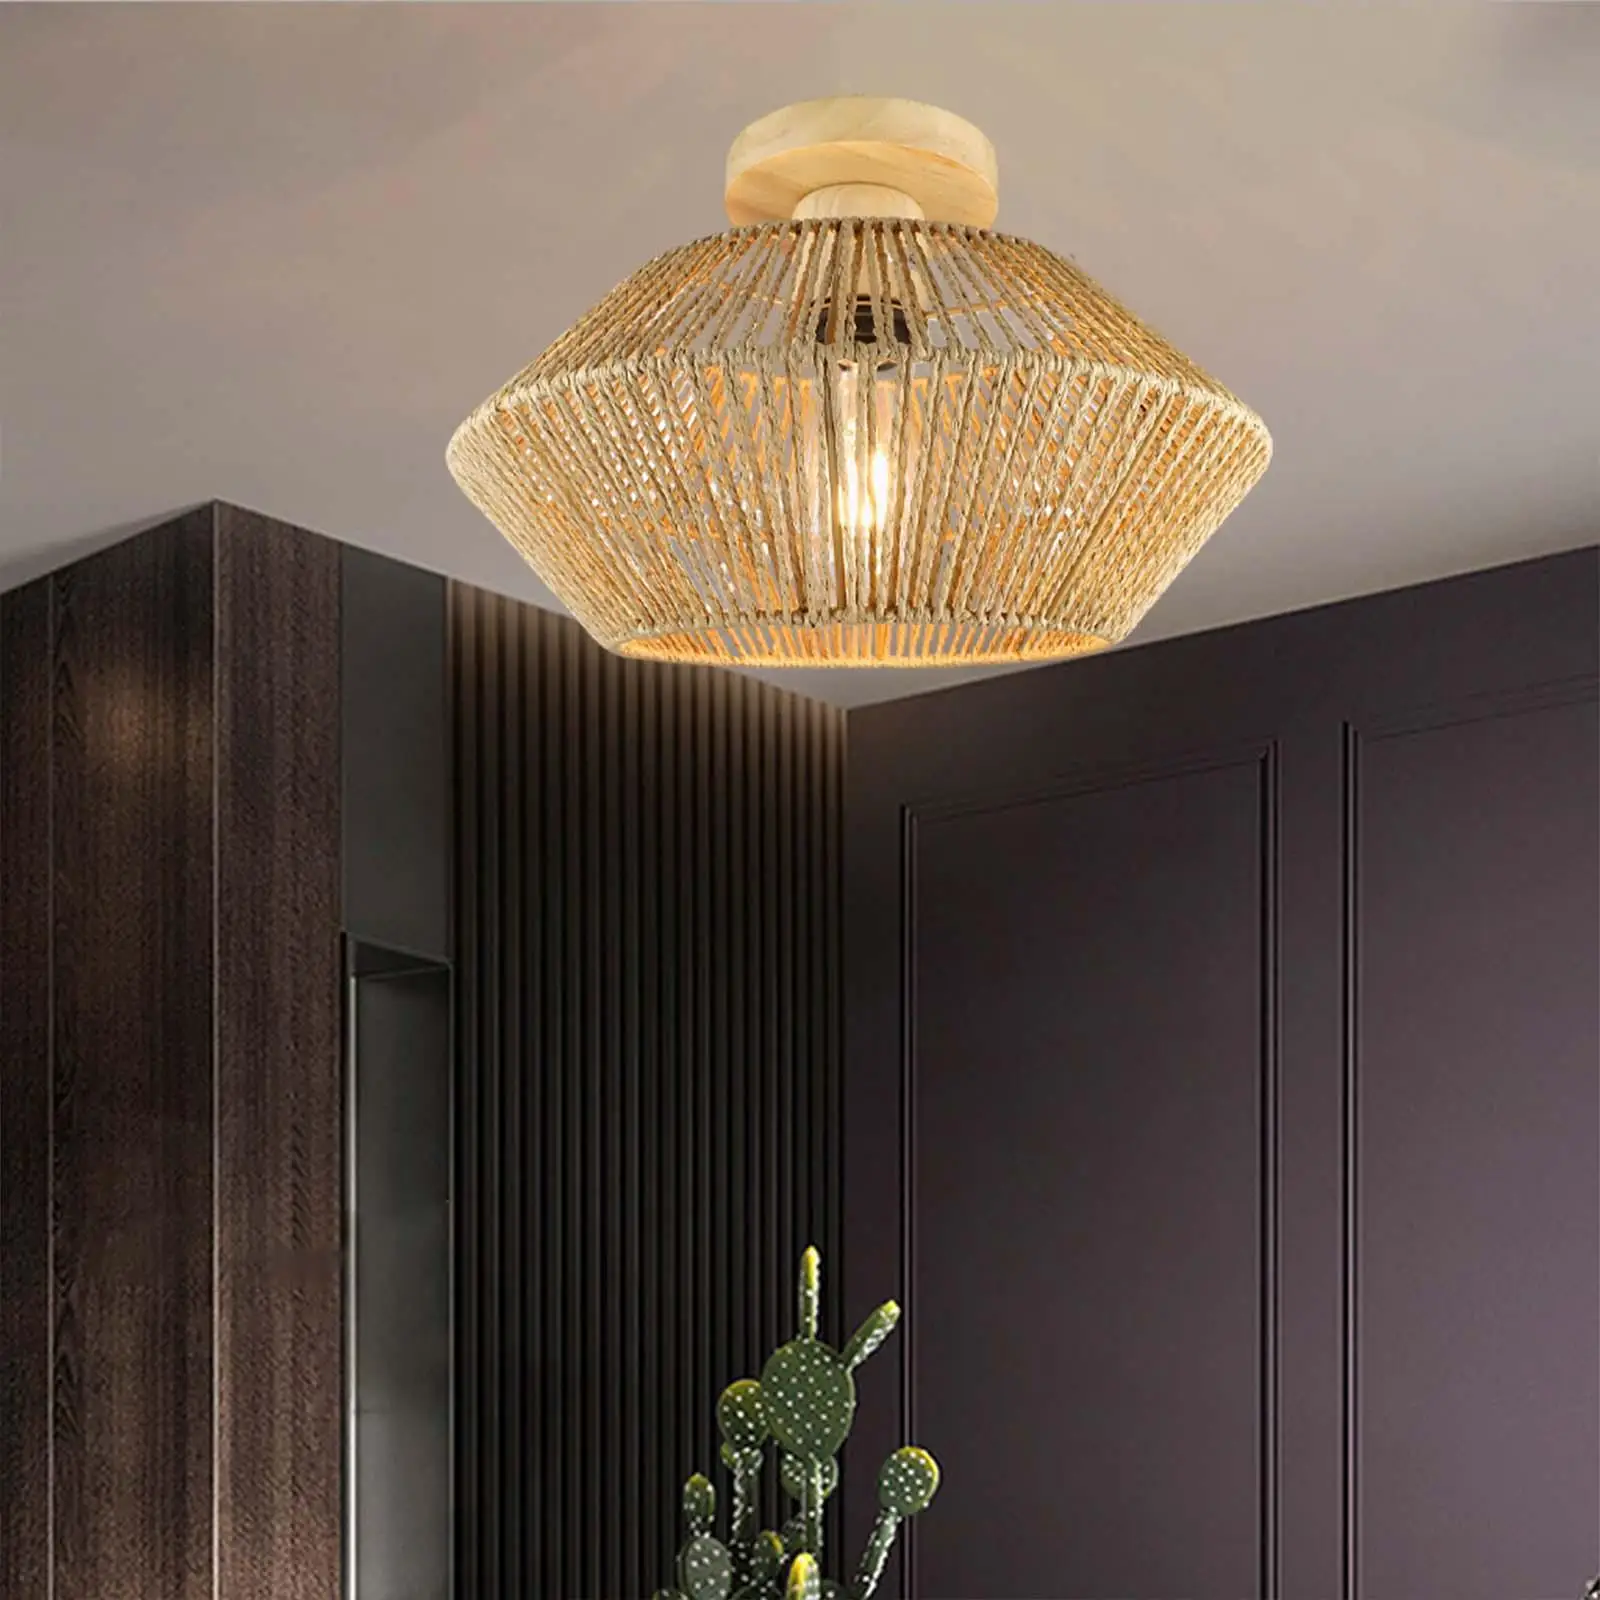 Vintage LED Ceiling Lamp Shades Light Fixture Handmade Woven Light Cover for Apartment Tea Room Restaurant Hallway Porch